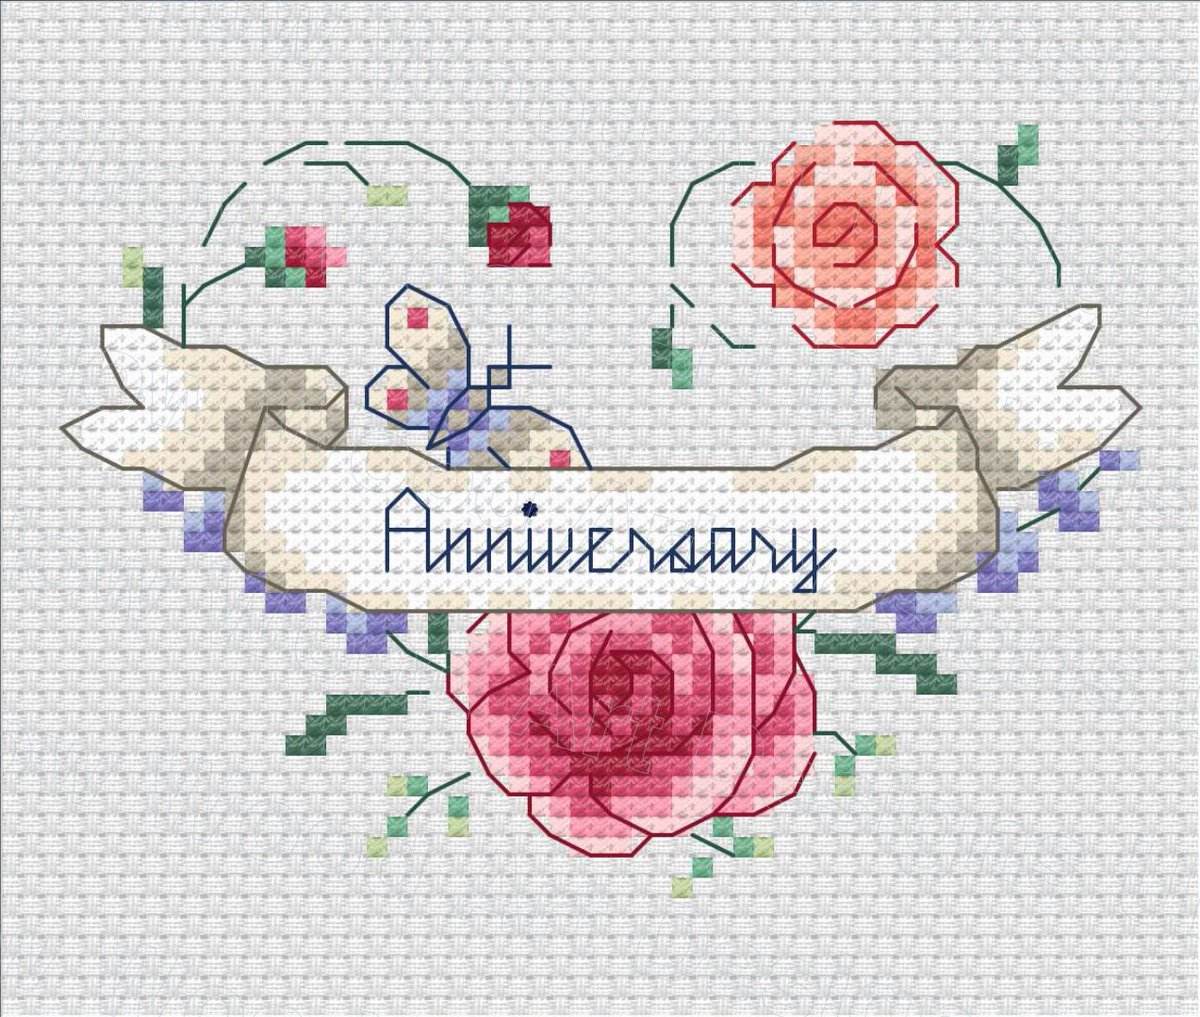 Heart 'Anniversary' Easy Cross Stitch Design, DMC, 20 Threads, PDF Digital Download etsy.me/3Svjnj3 #anniversary #bedroom #wall #homedecor #digitalcrossstitch #flowercrossstitch #heartcrossstitch #butterfly #flowers #etsy #etsyUK #etsyshop